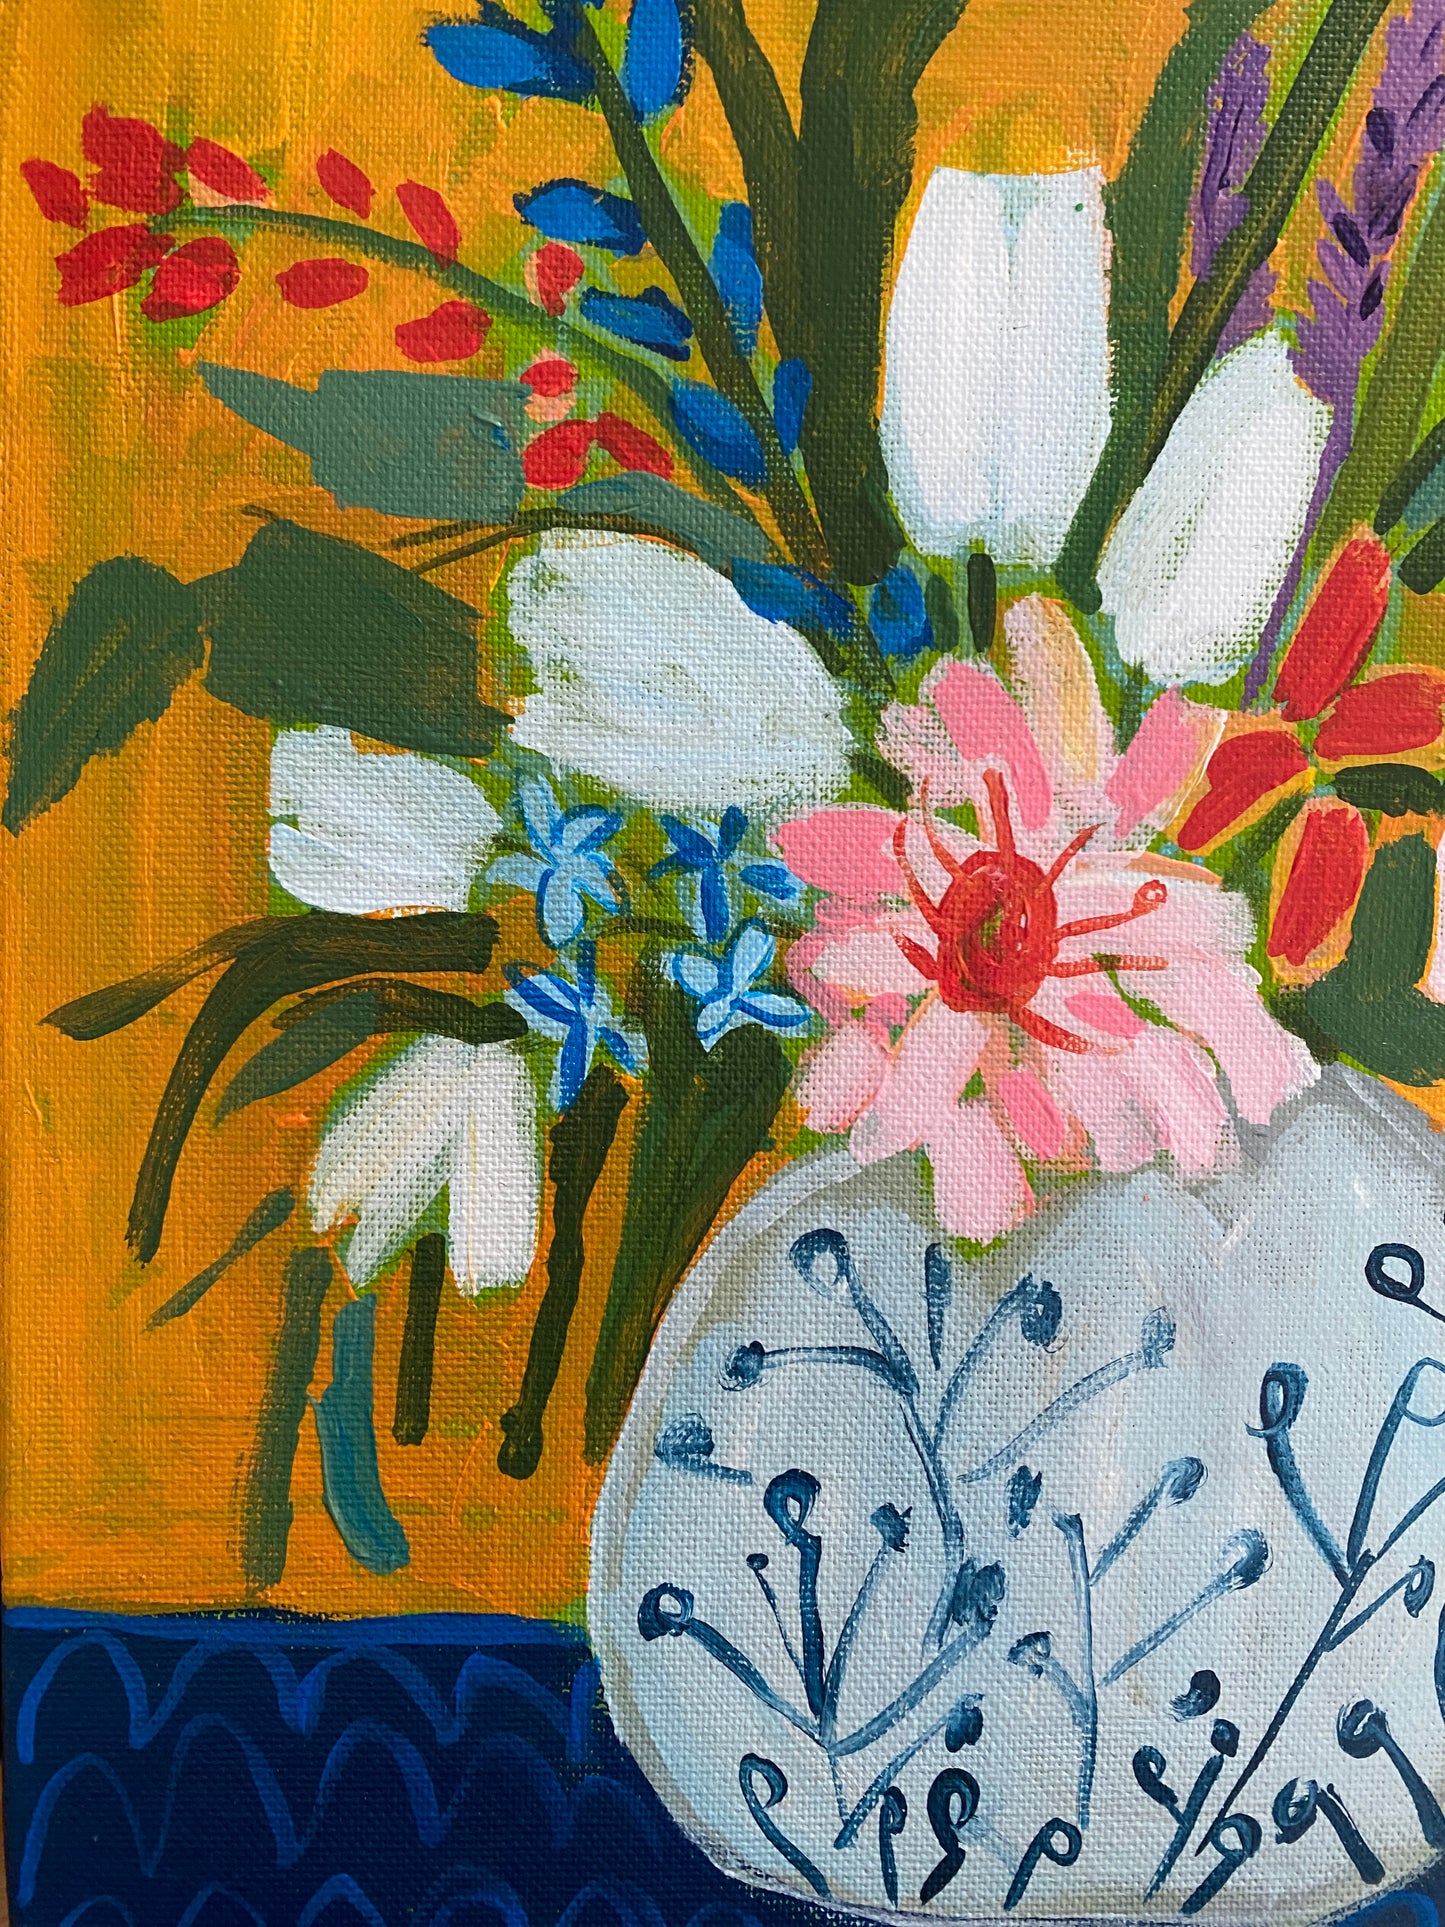 Original Art / Cut Flowers in Vintage Vase / Royal blue and mustard yellow /